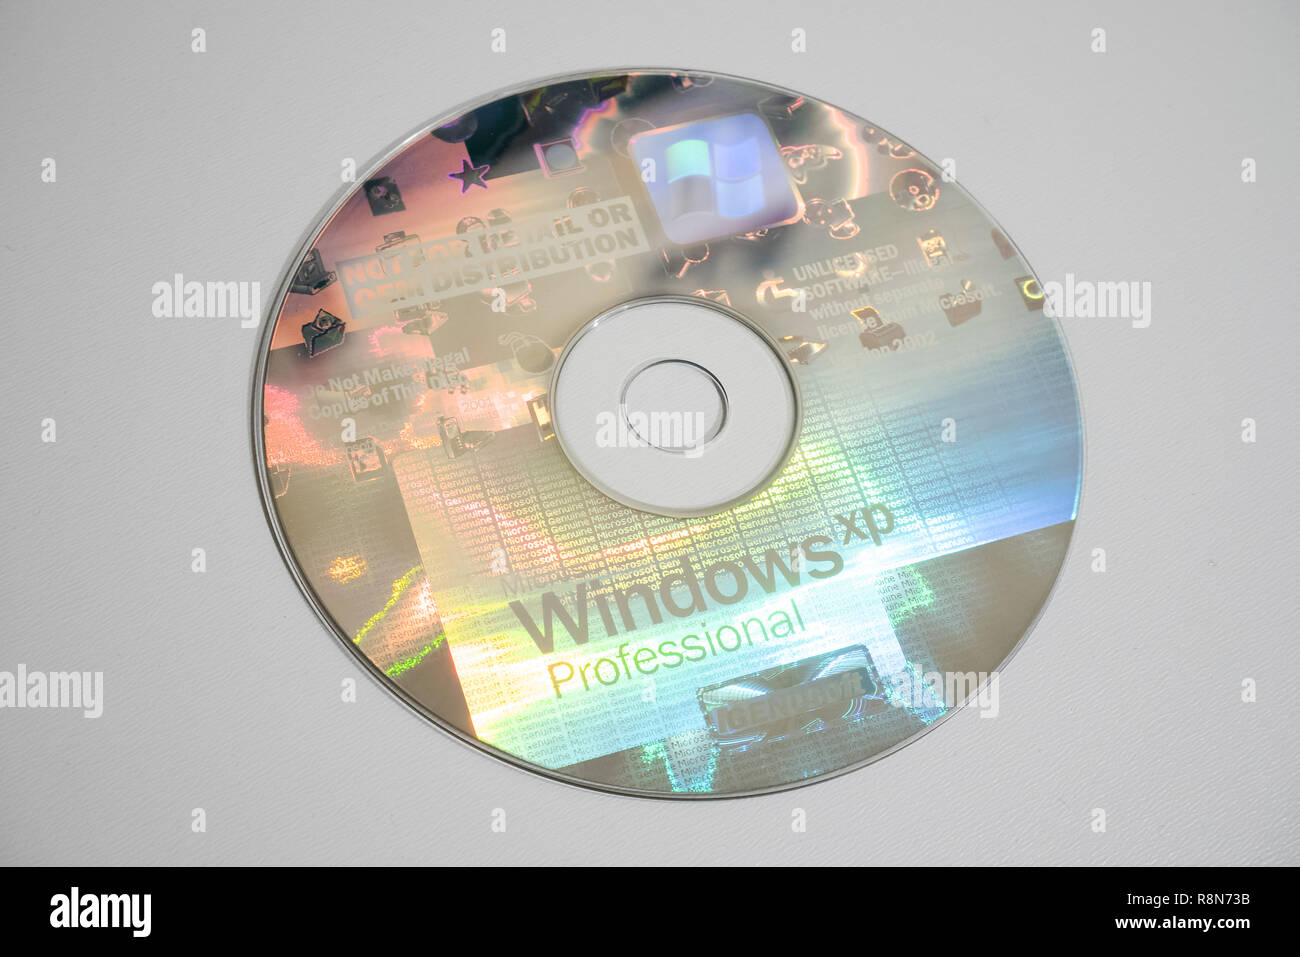 microsoft windows xp cd Stock Photo - Alamy